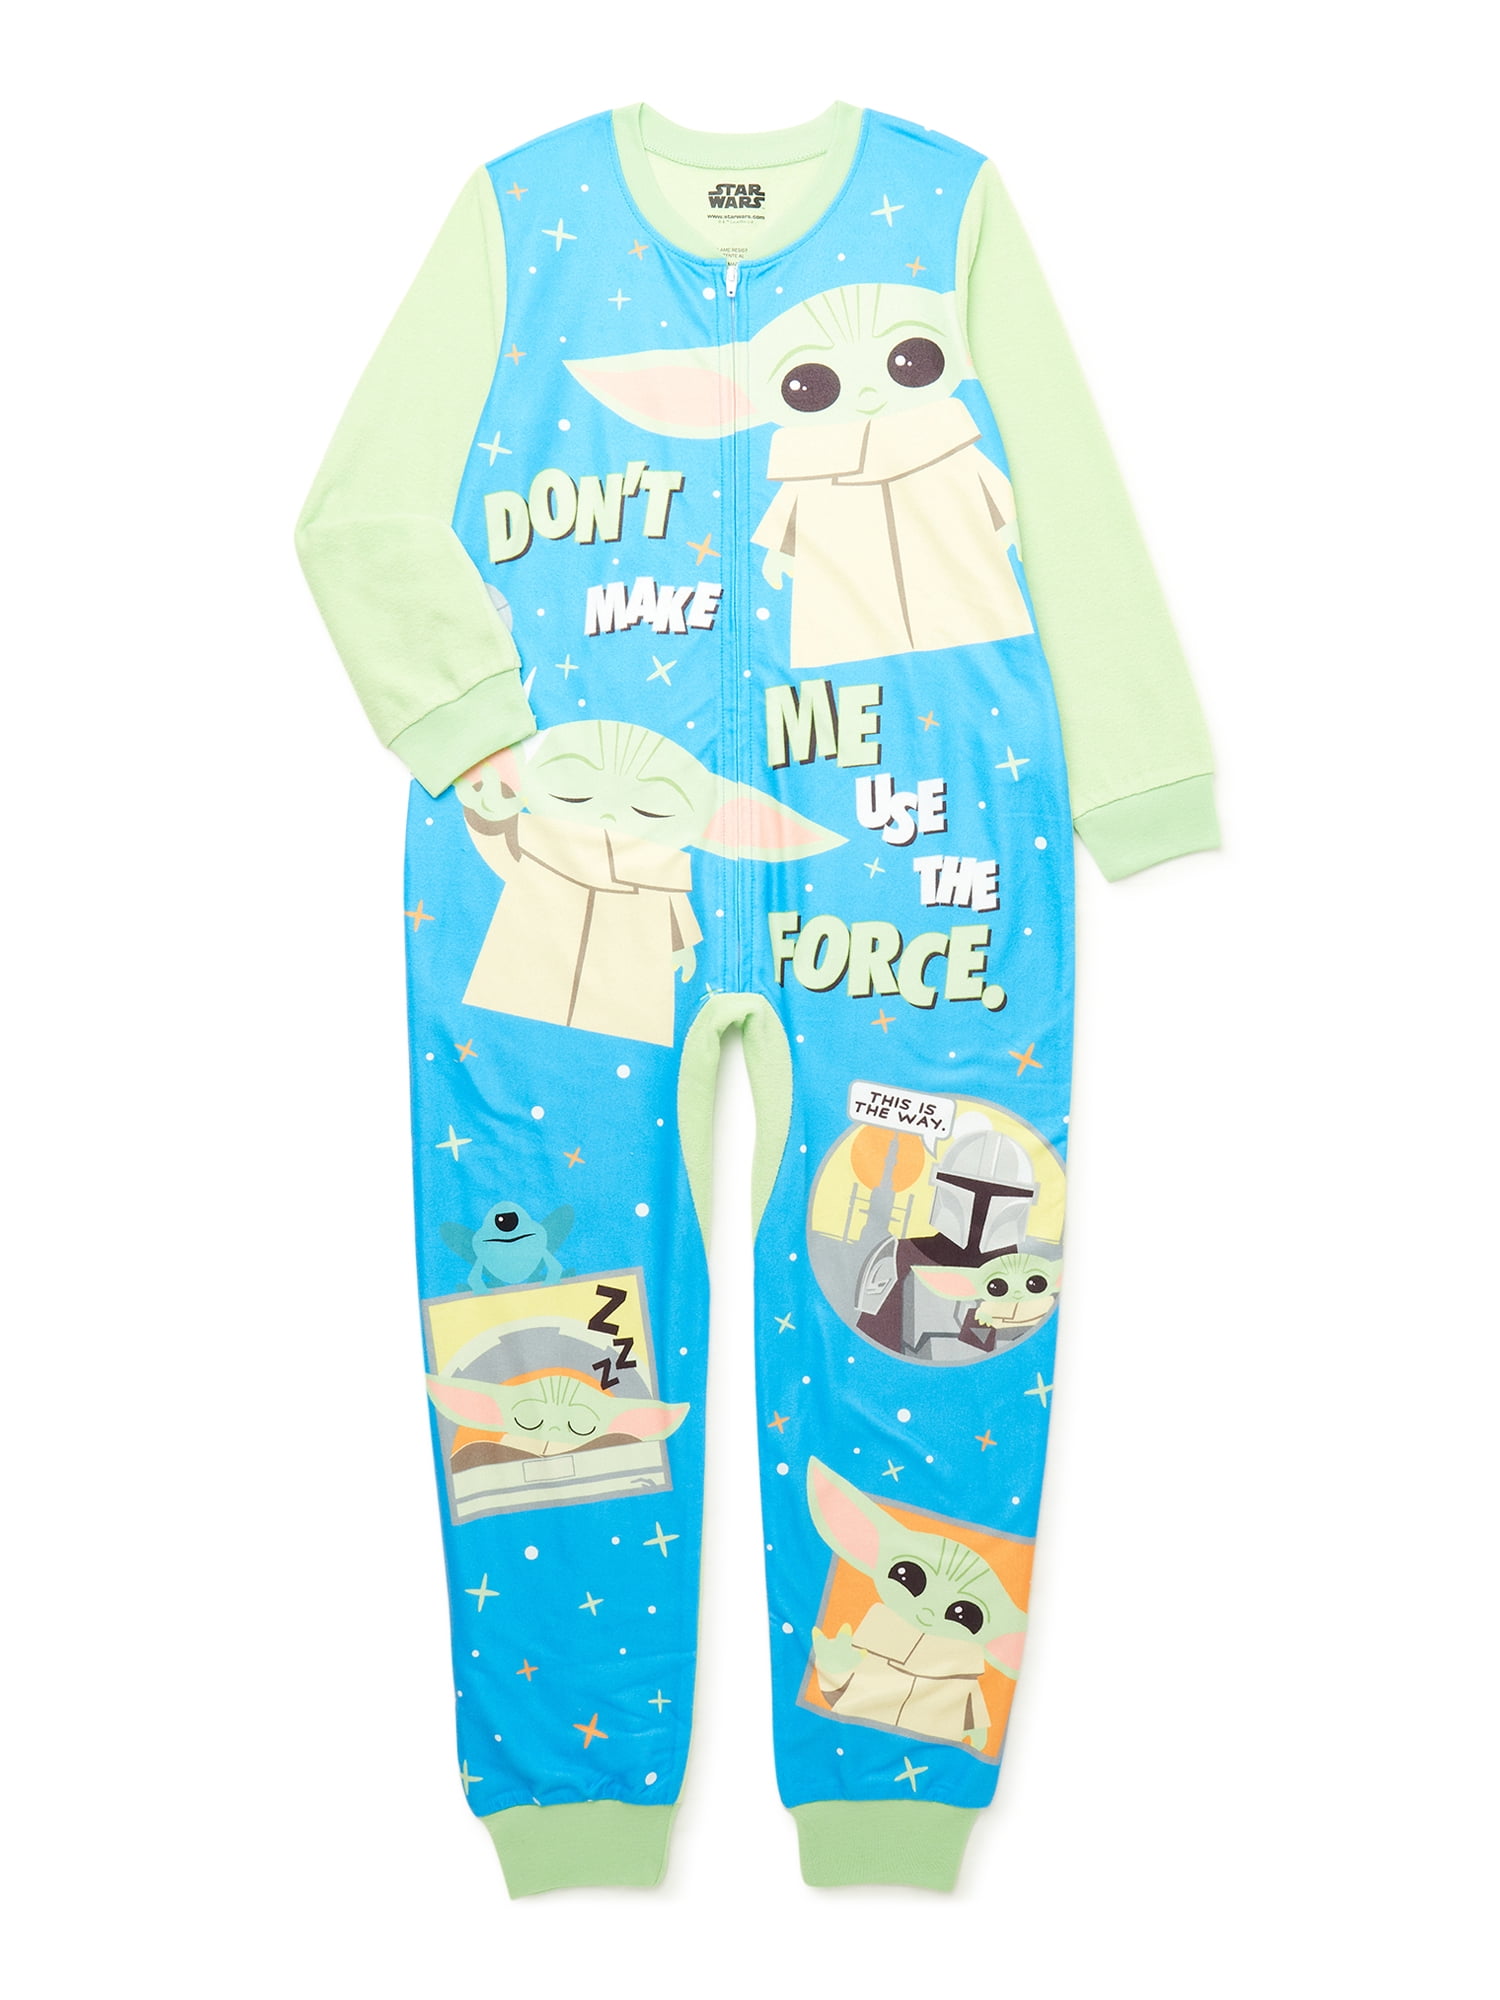 MINECRAFT Pajamas Size 4/5,8,10/12 Boys One Piece Union Suit Blanket Sleeper NEW 